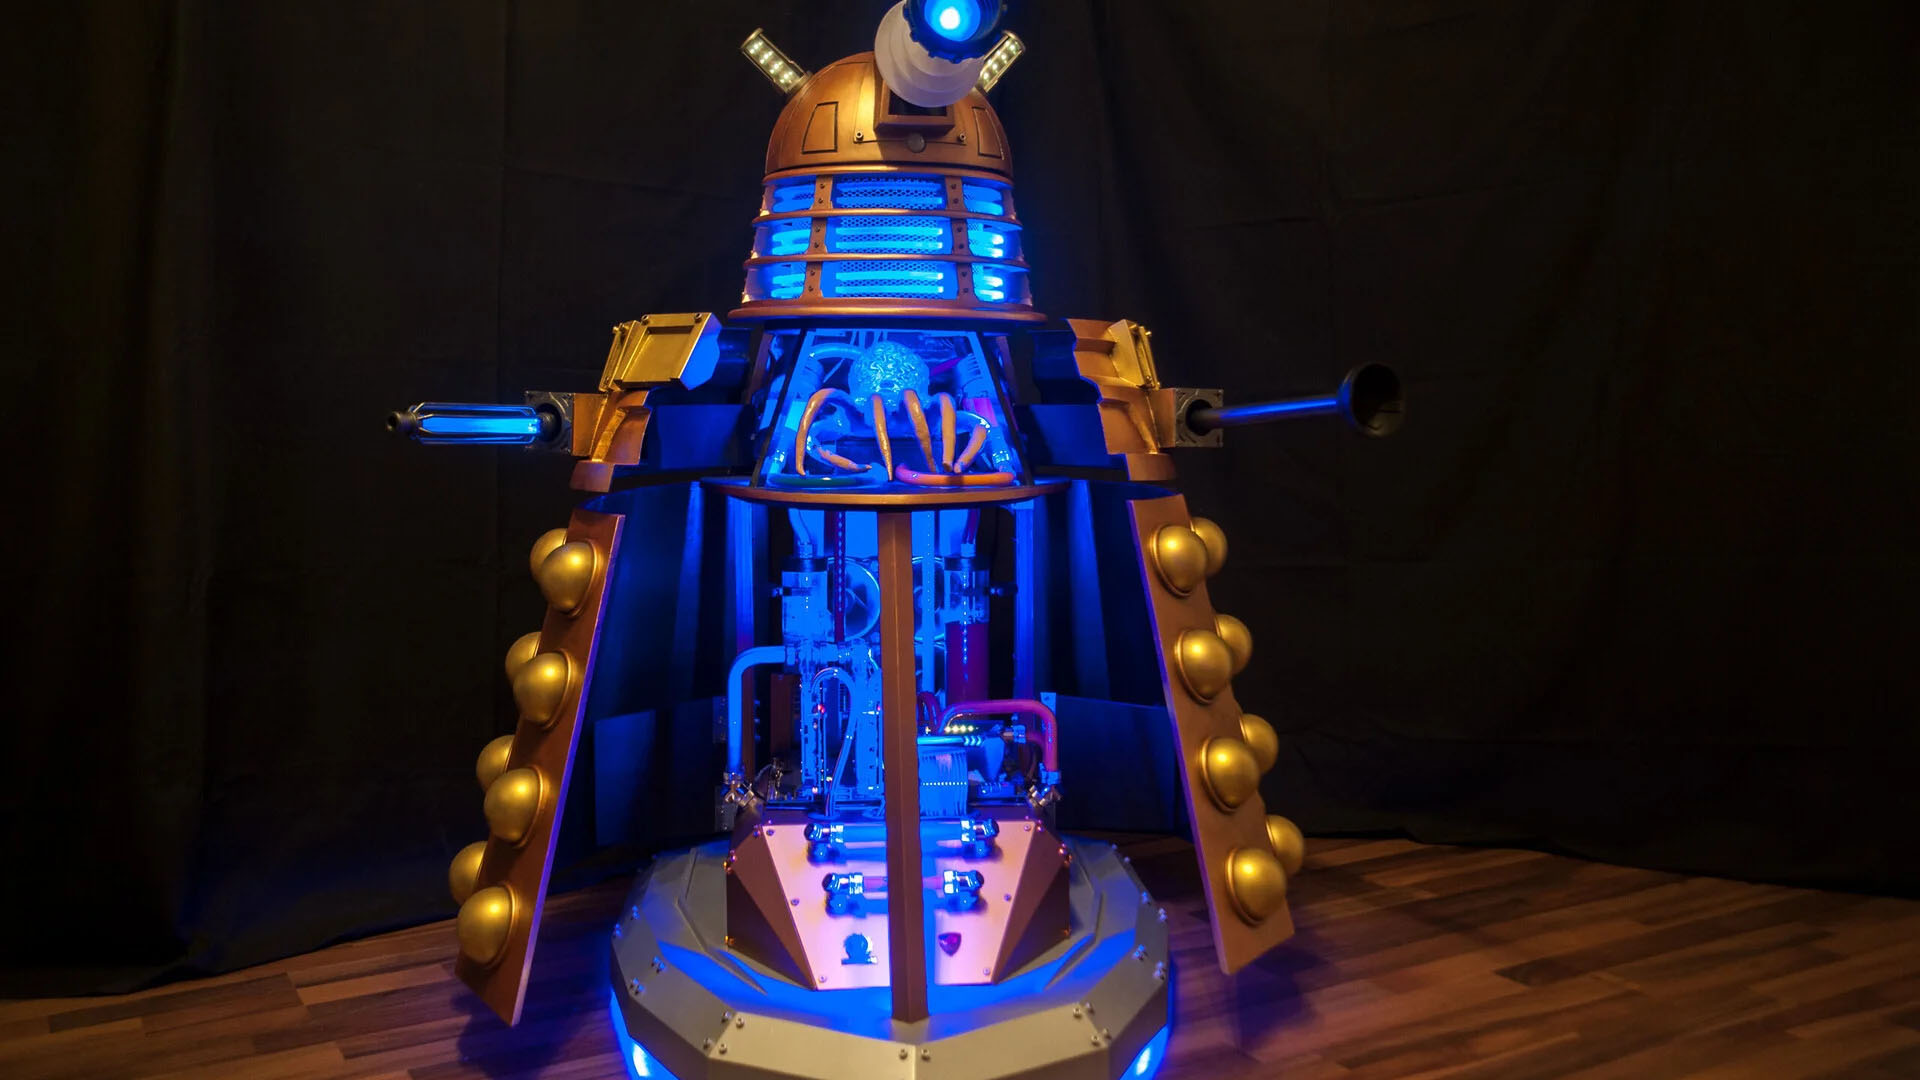 Dr Who Dalek Gaming PC: Insides